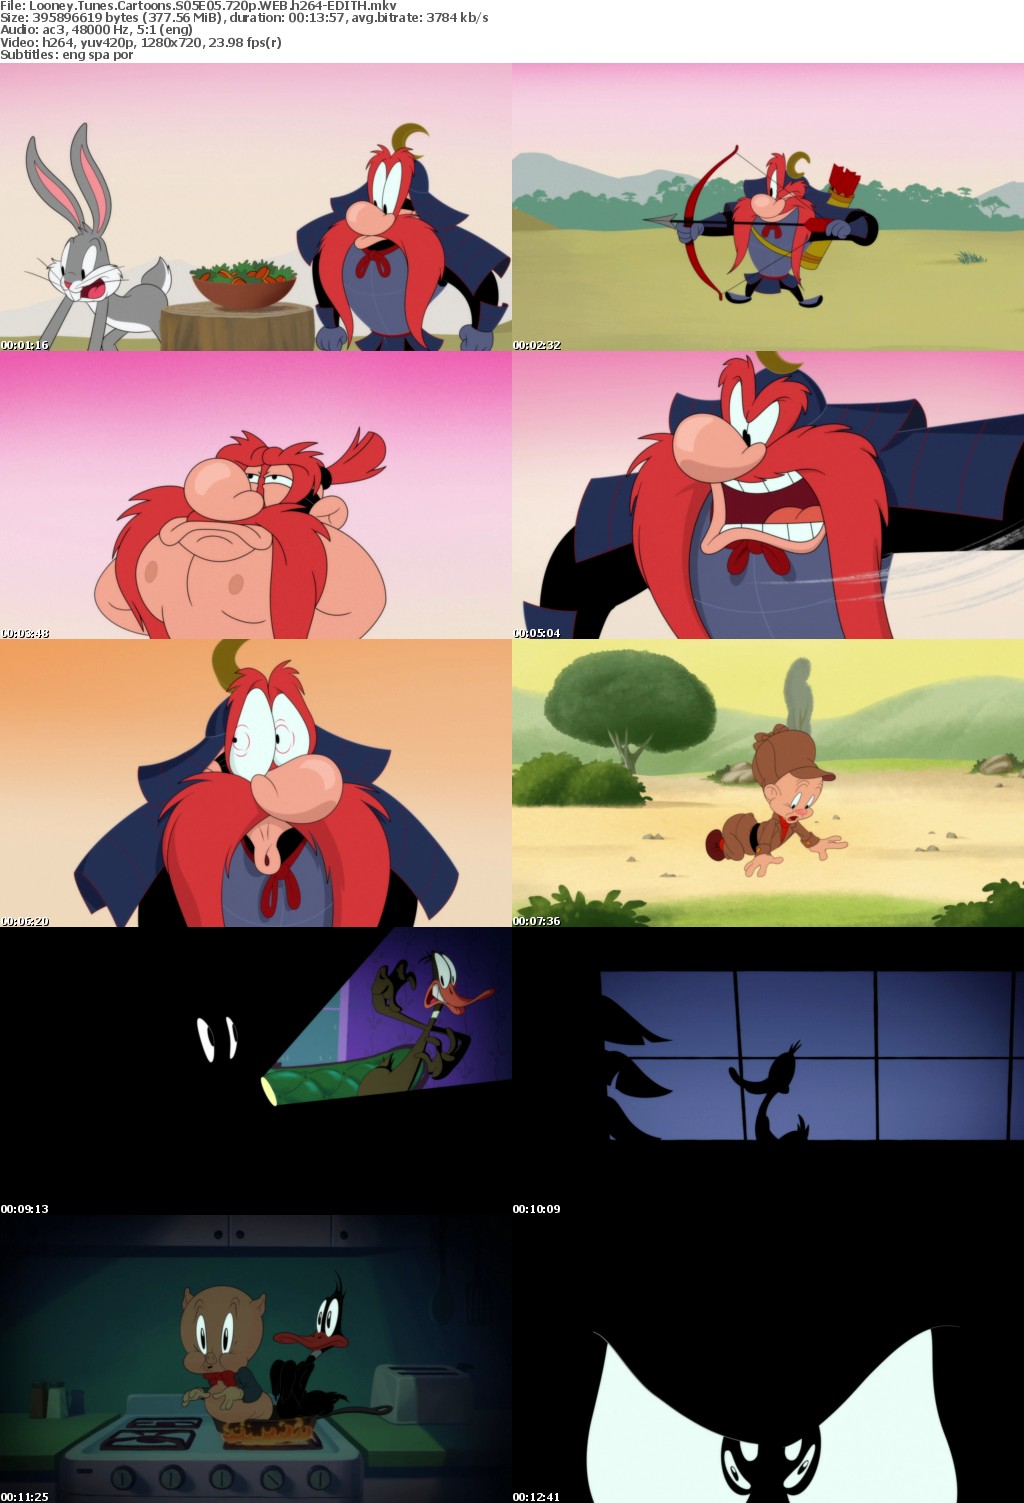 Looney Tunes Cartoons S05E05 720p WEB h264-EDITH